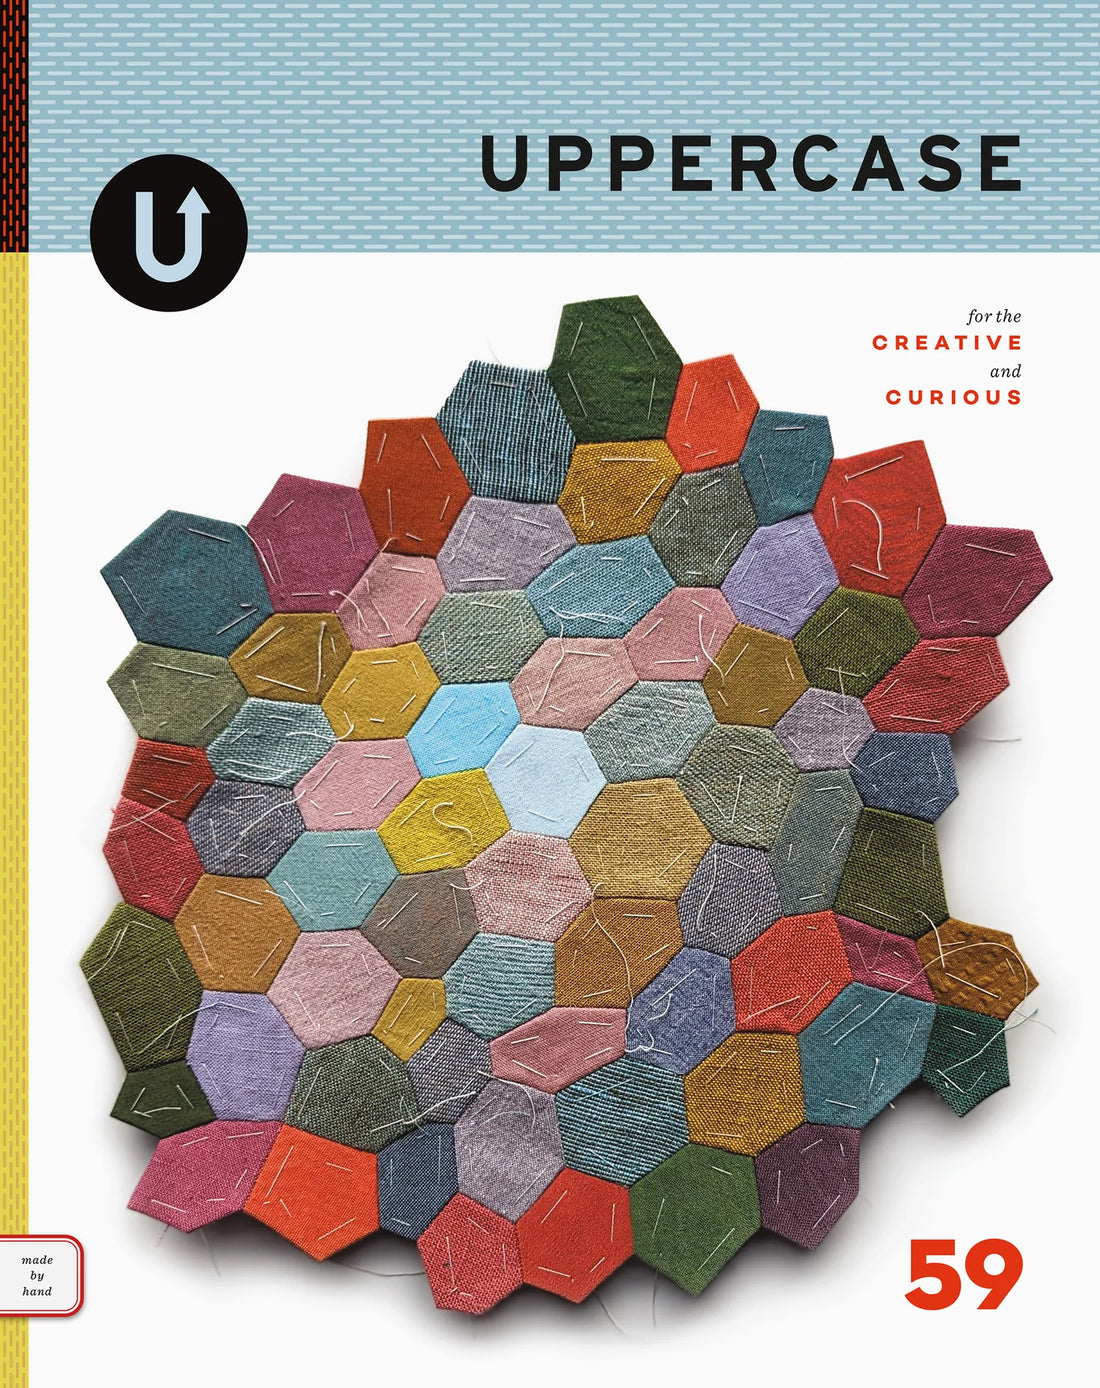 Uppercase magazine, Issue 59